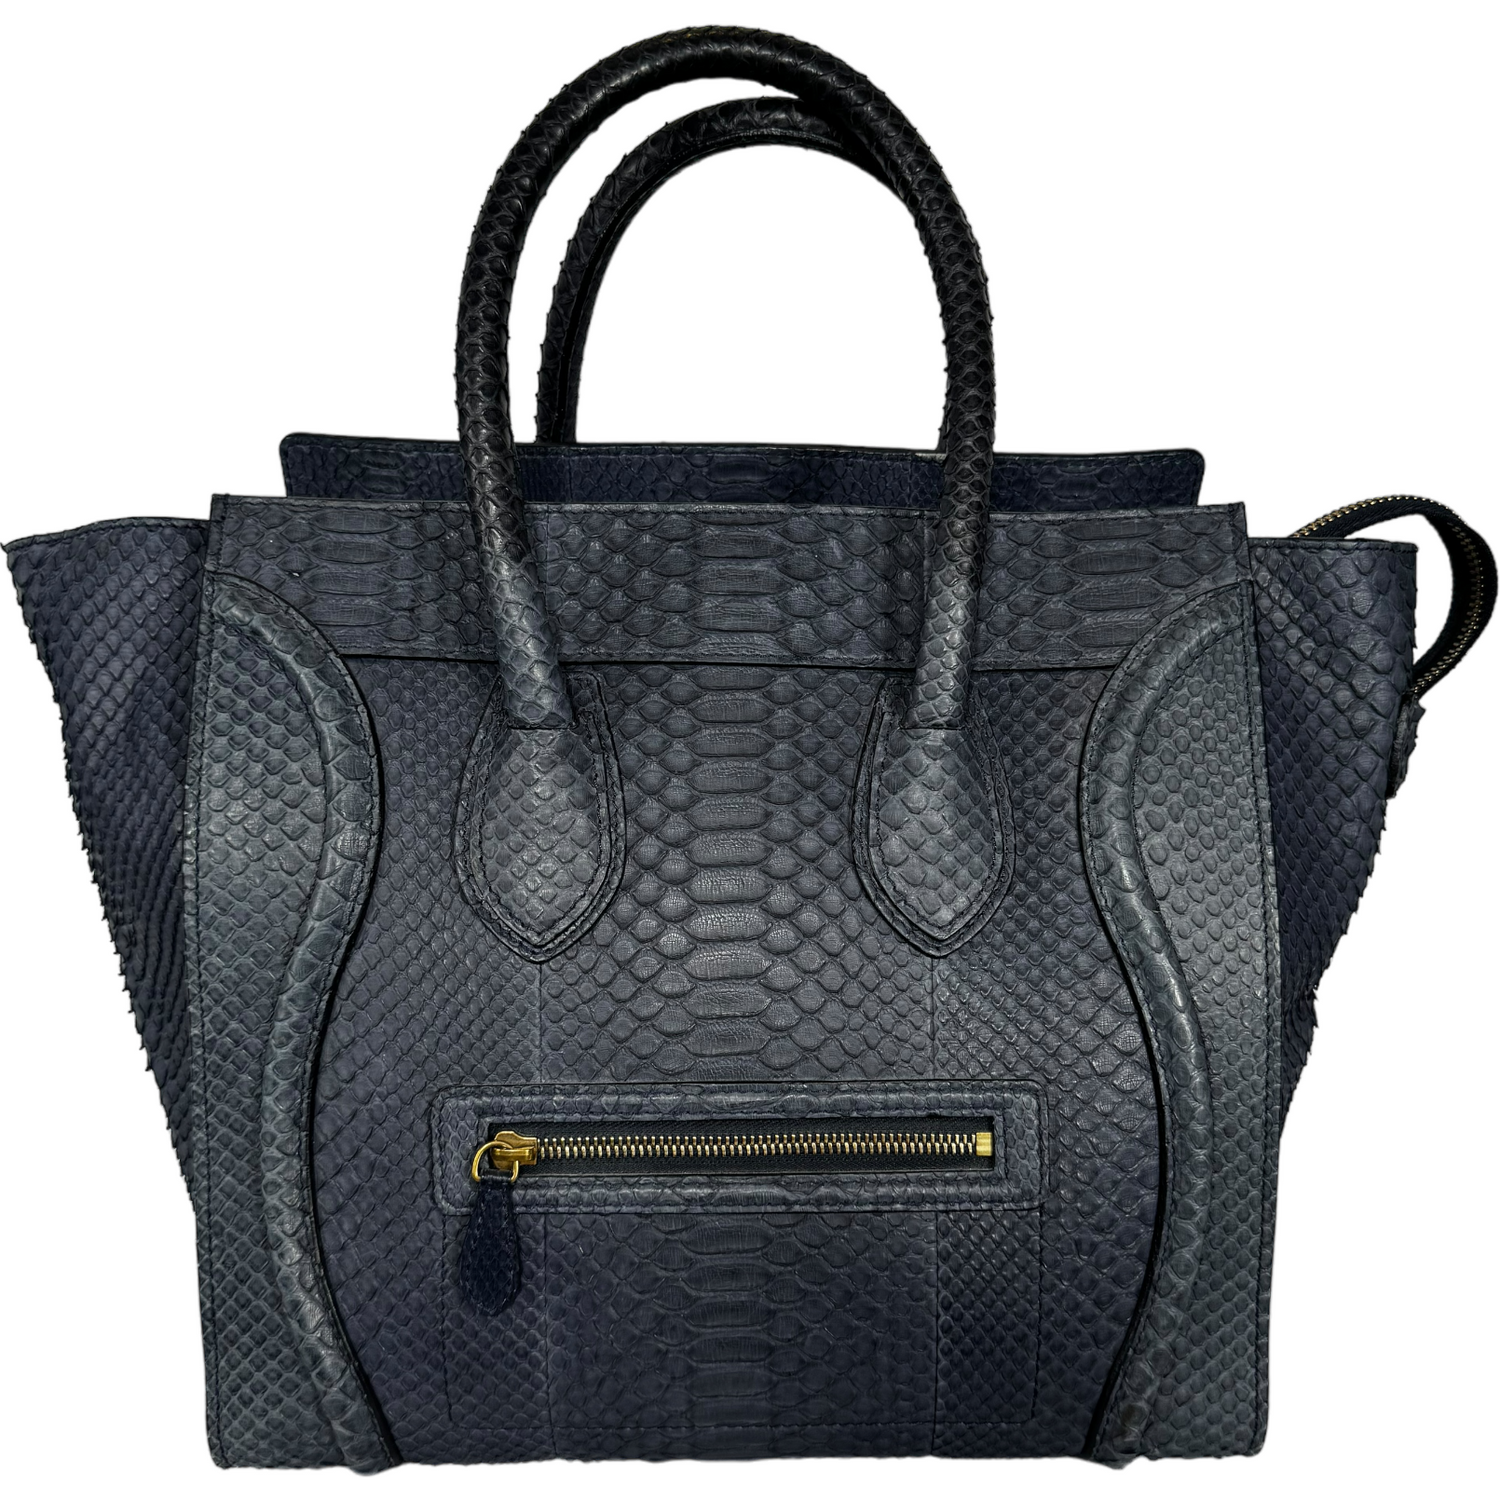 Celine dark blue python nano luggage handbag.